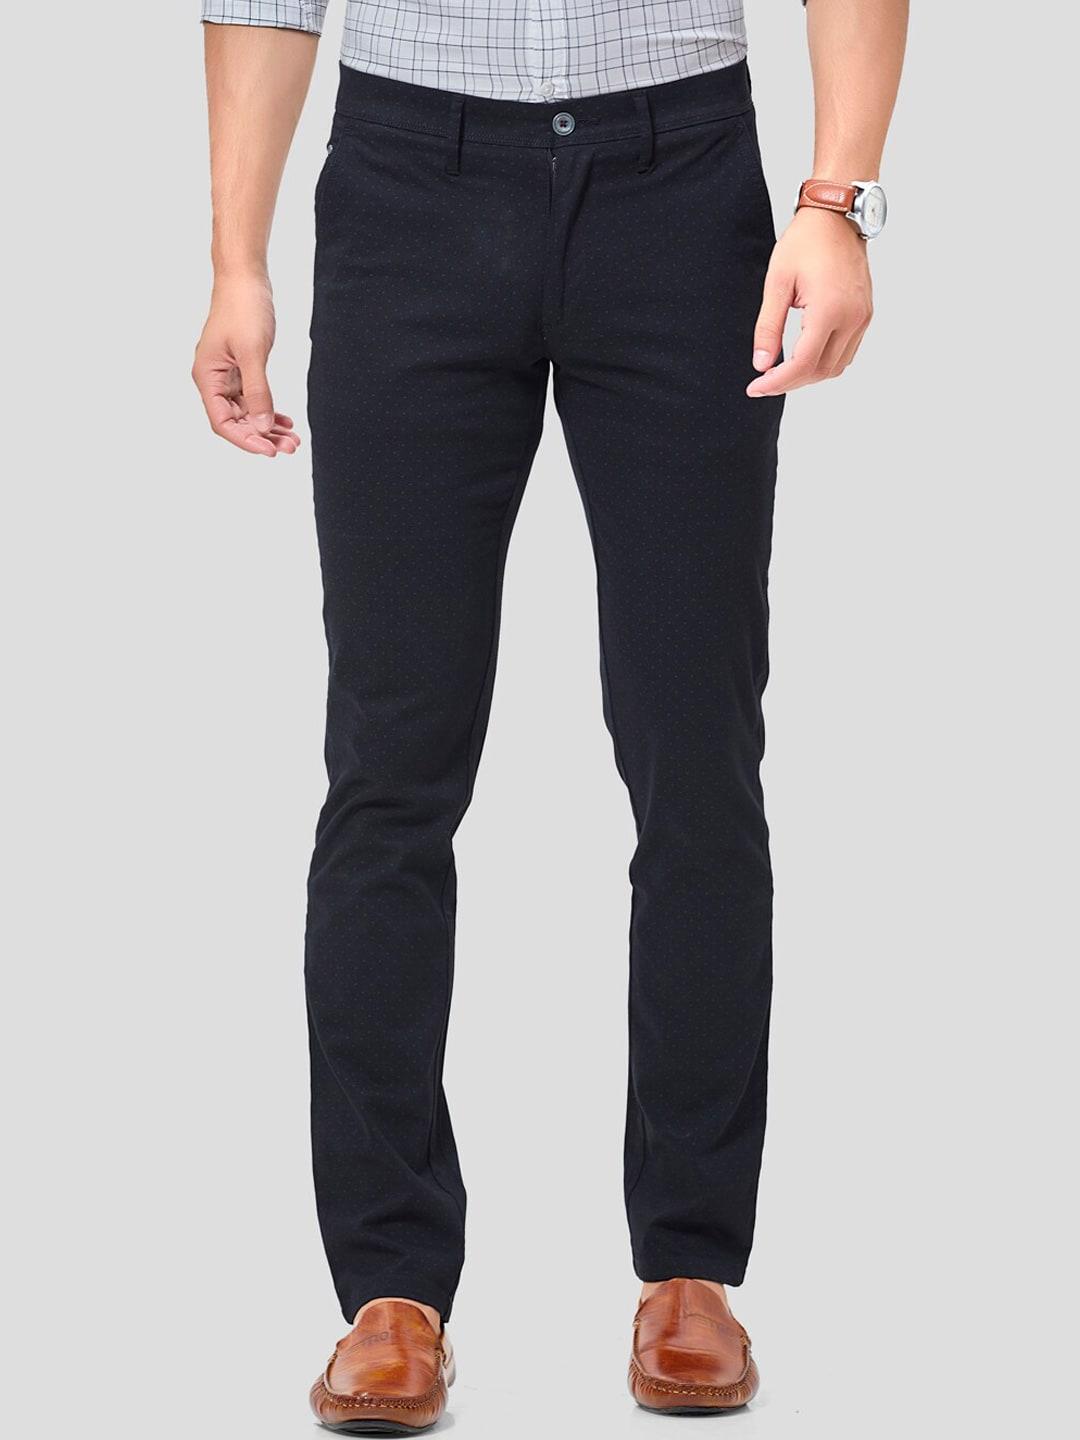 Oxemberg Men Black Printed Smart Slim Fit Chinos Trousers